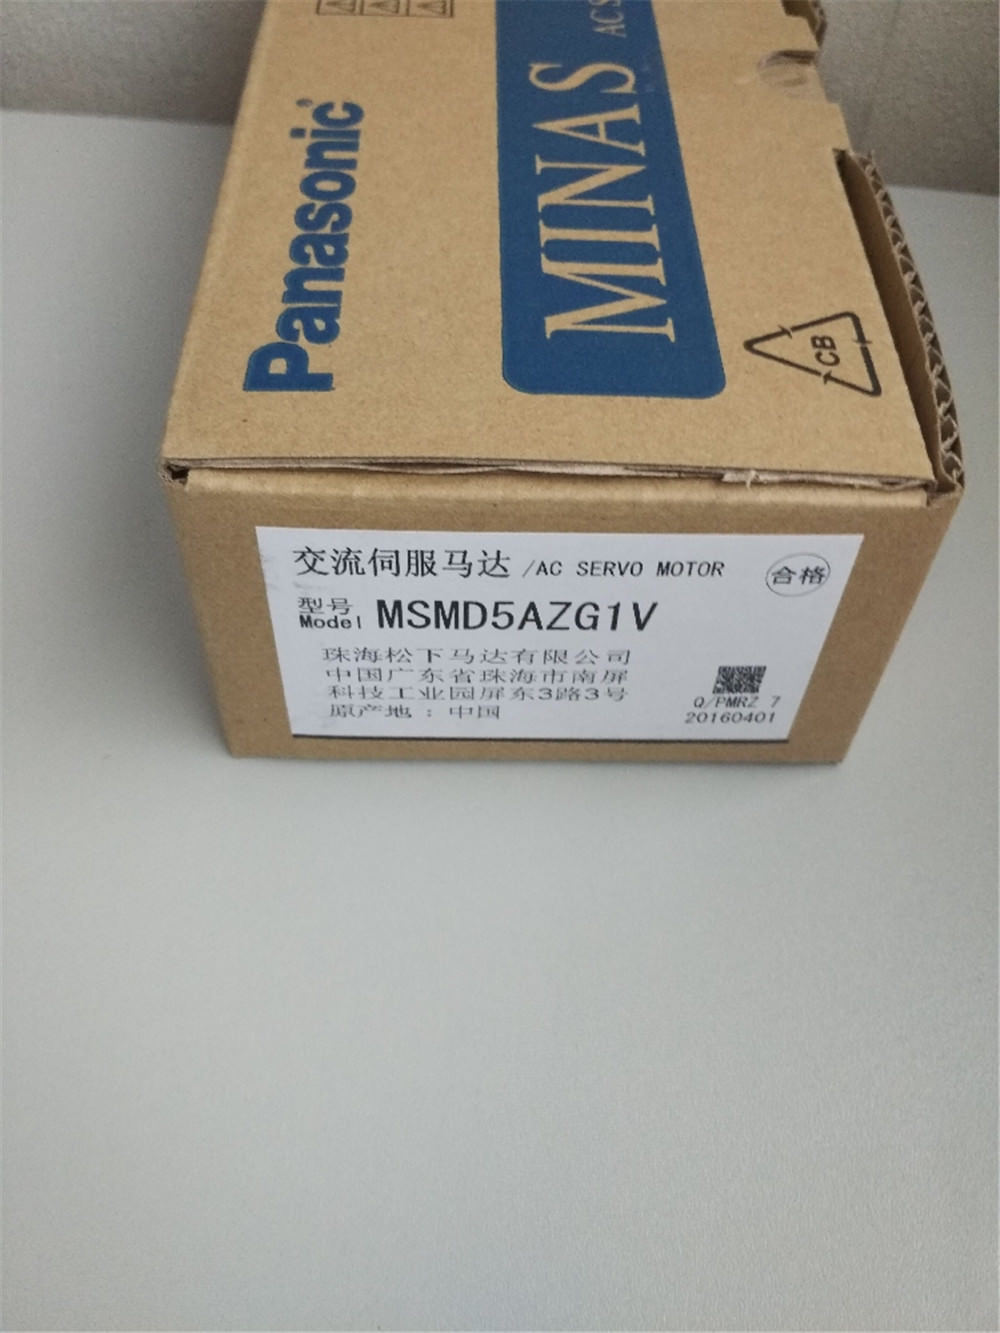 Original New PANASONIC AC Servo motor MSMD5AZG1V in box - Click Image to Close